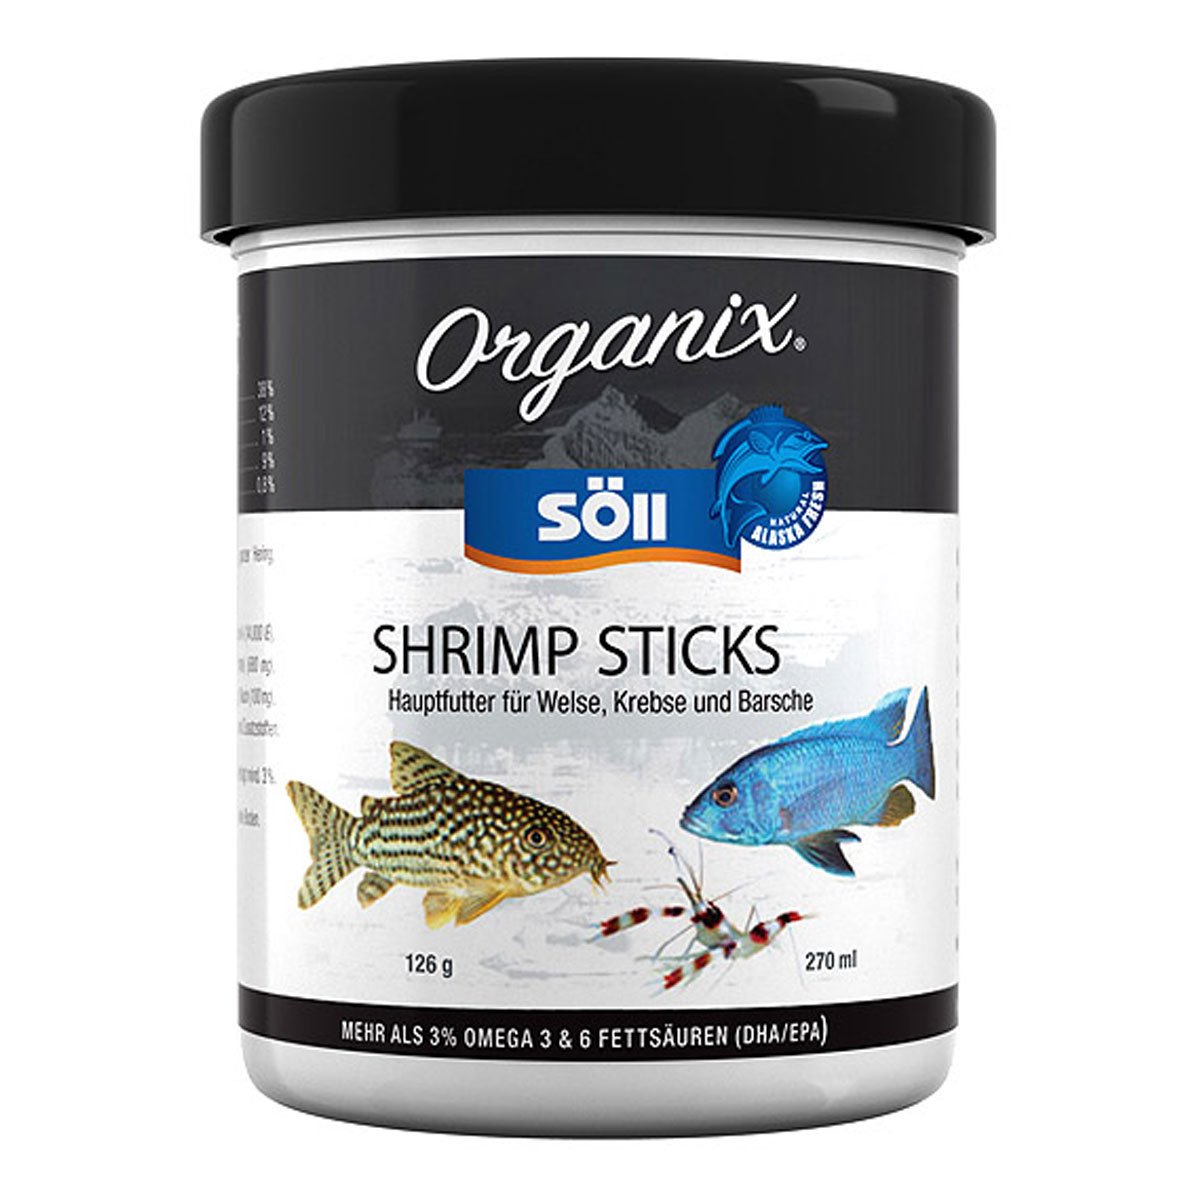 Söll Organix Shrimp Sticks 270 ml